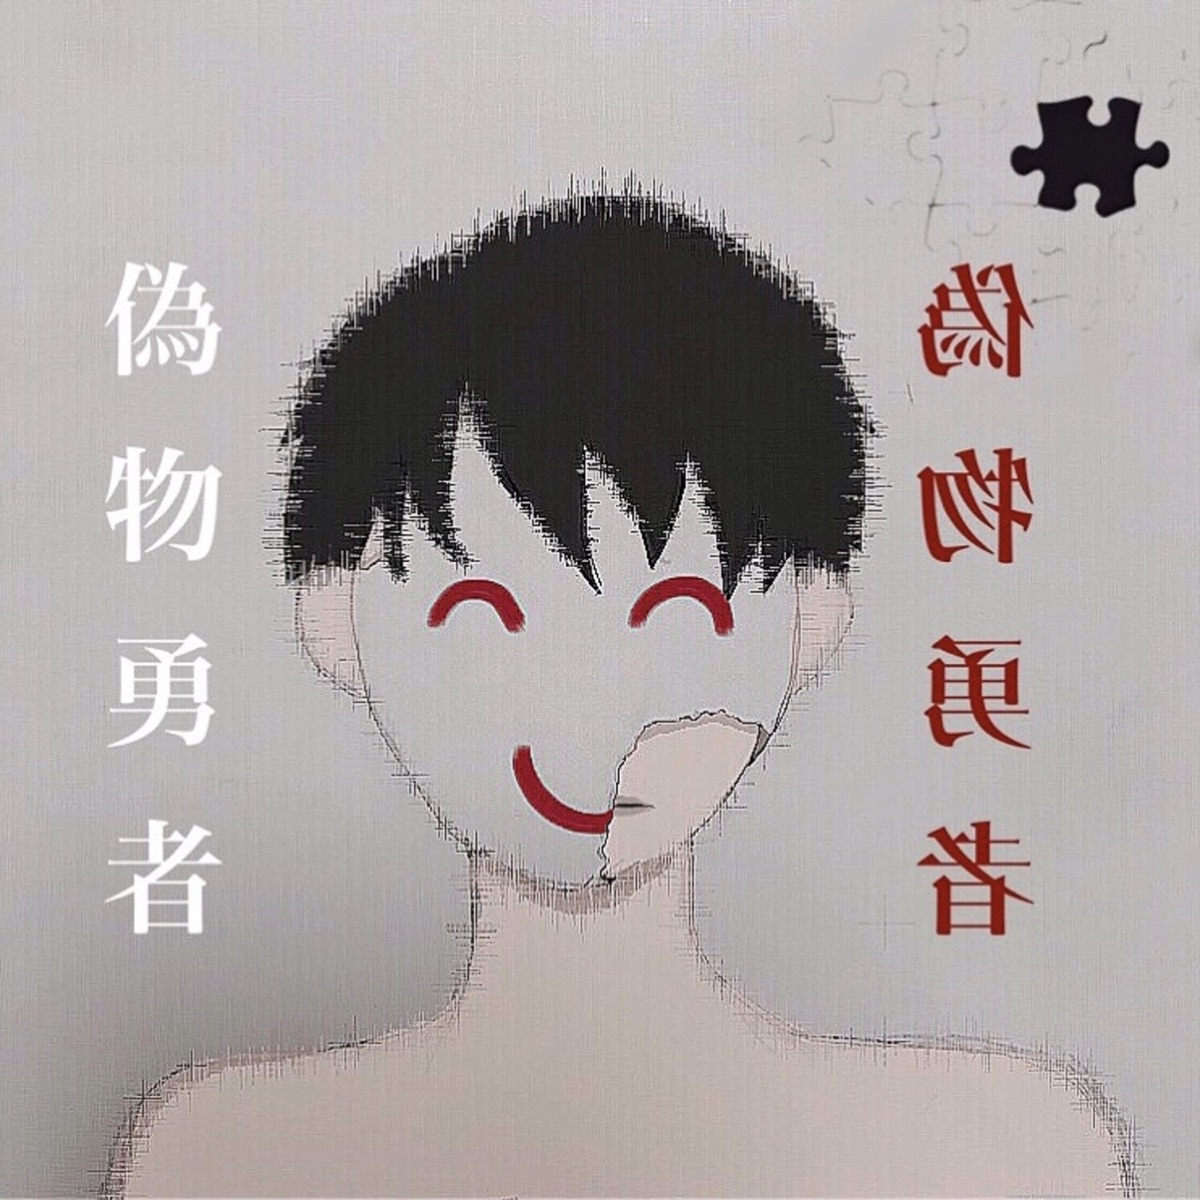 Cover art for『703goushitsu - 偽物勇者』from the release『Nisemono Yuusha